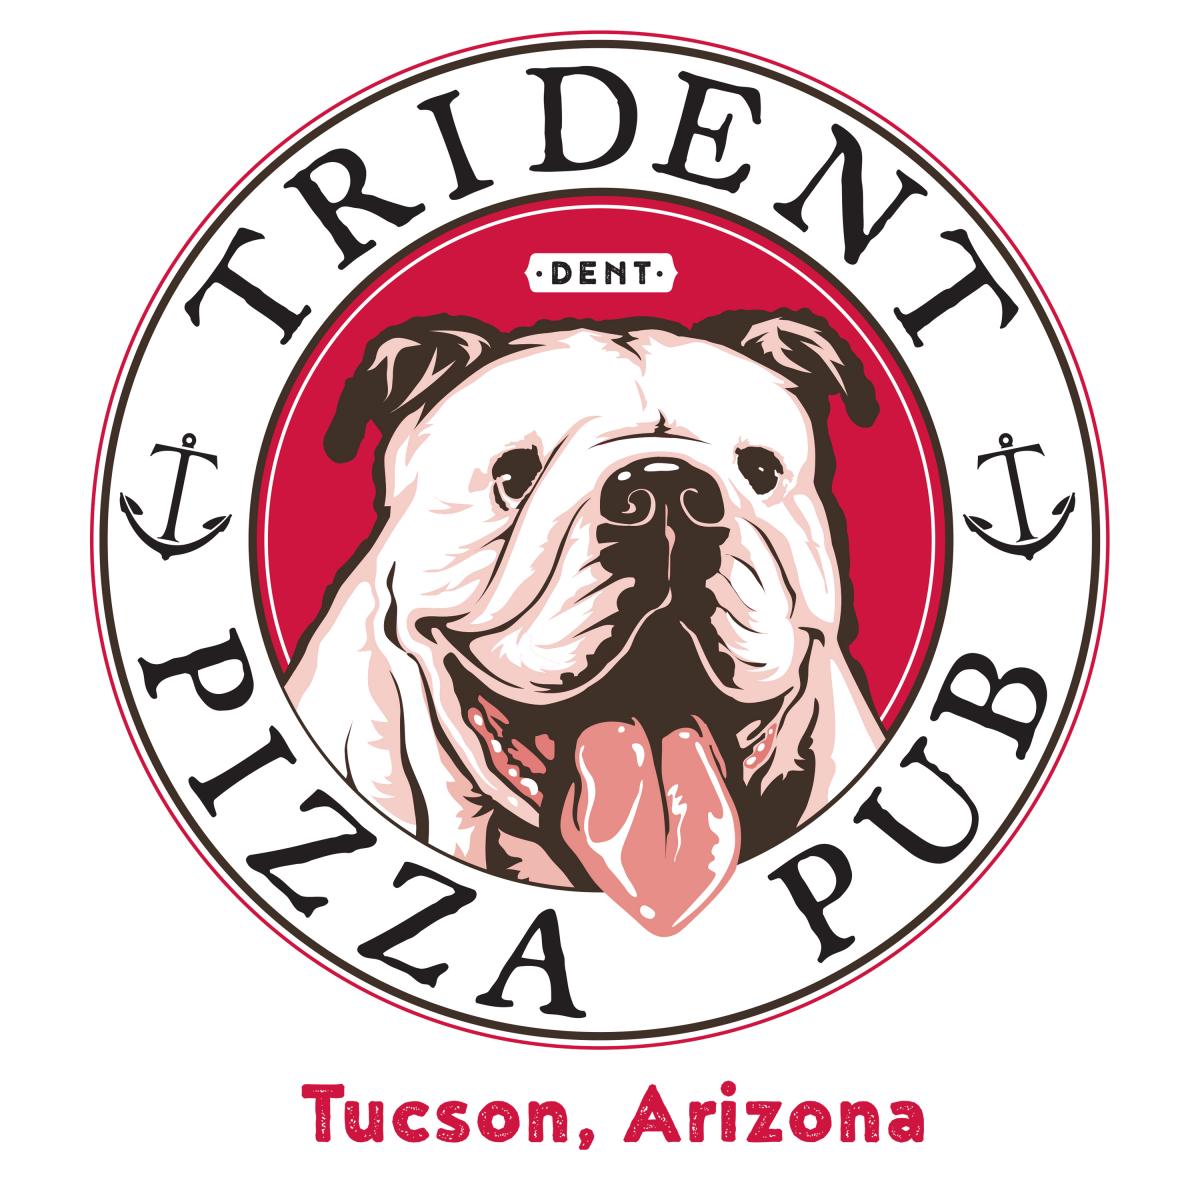 Pizza Pub logo.jpg